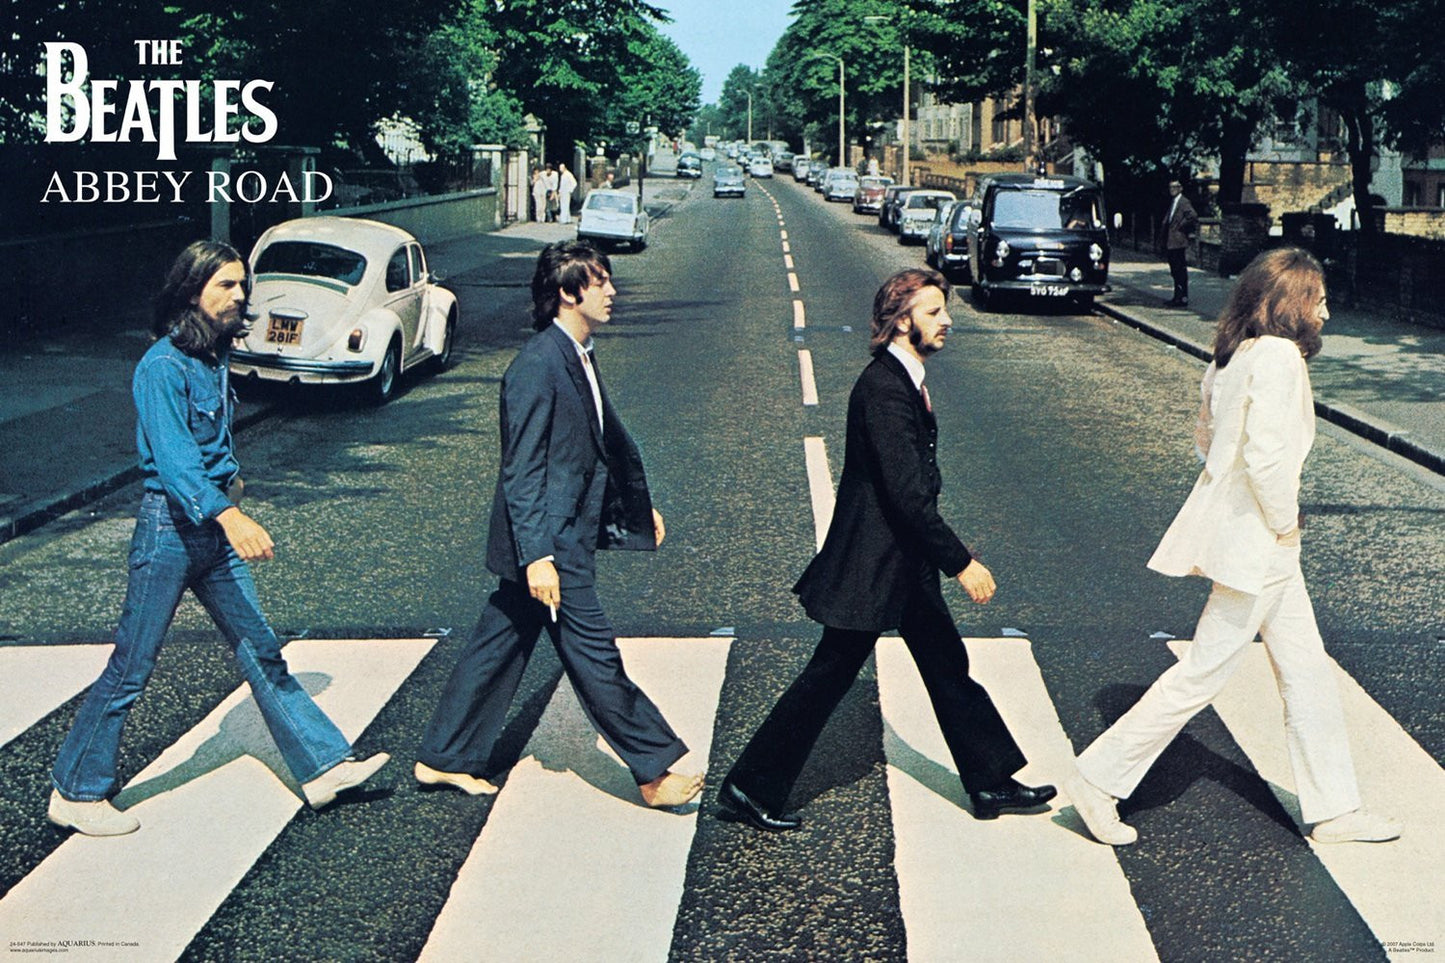 The Beatles Abbey Road Poster - HalfMoonMusic